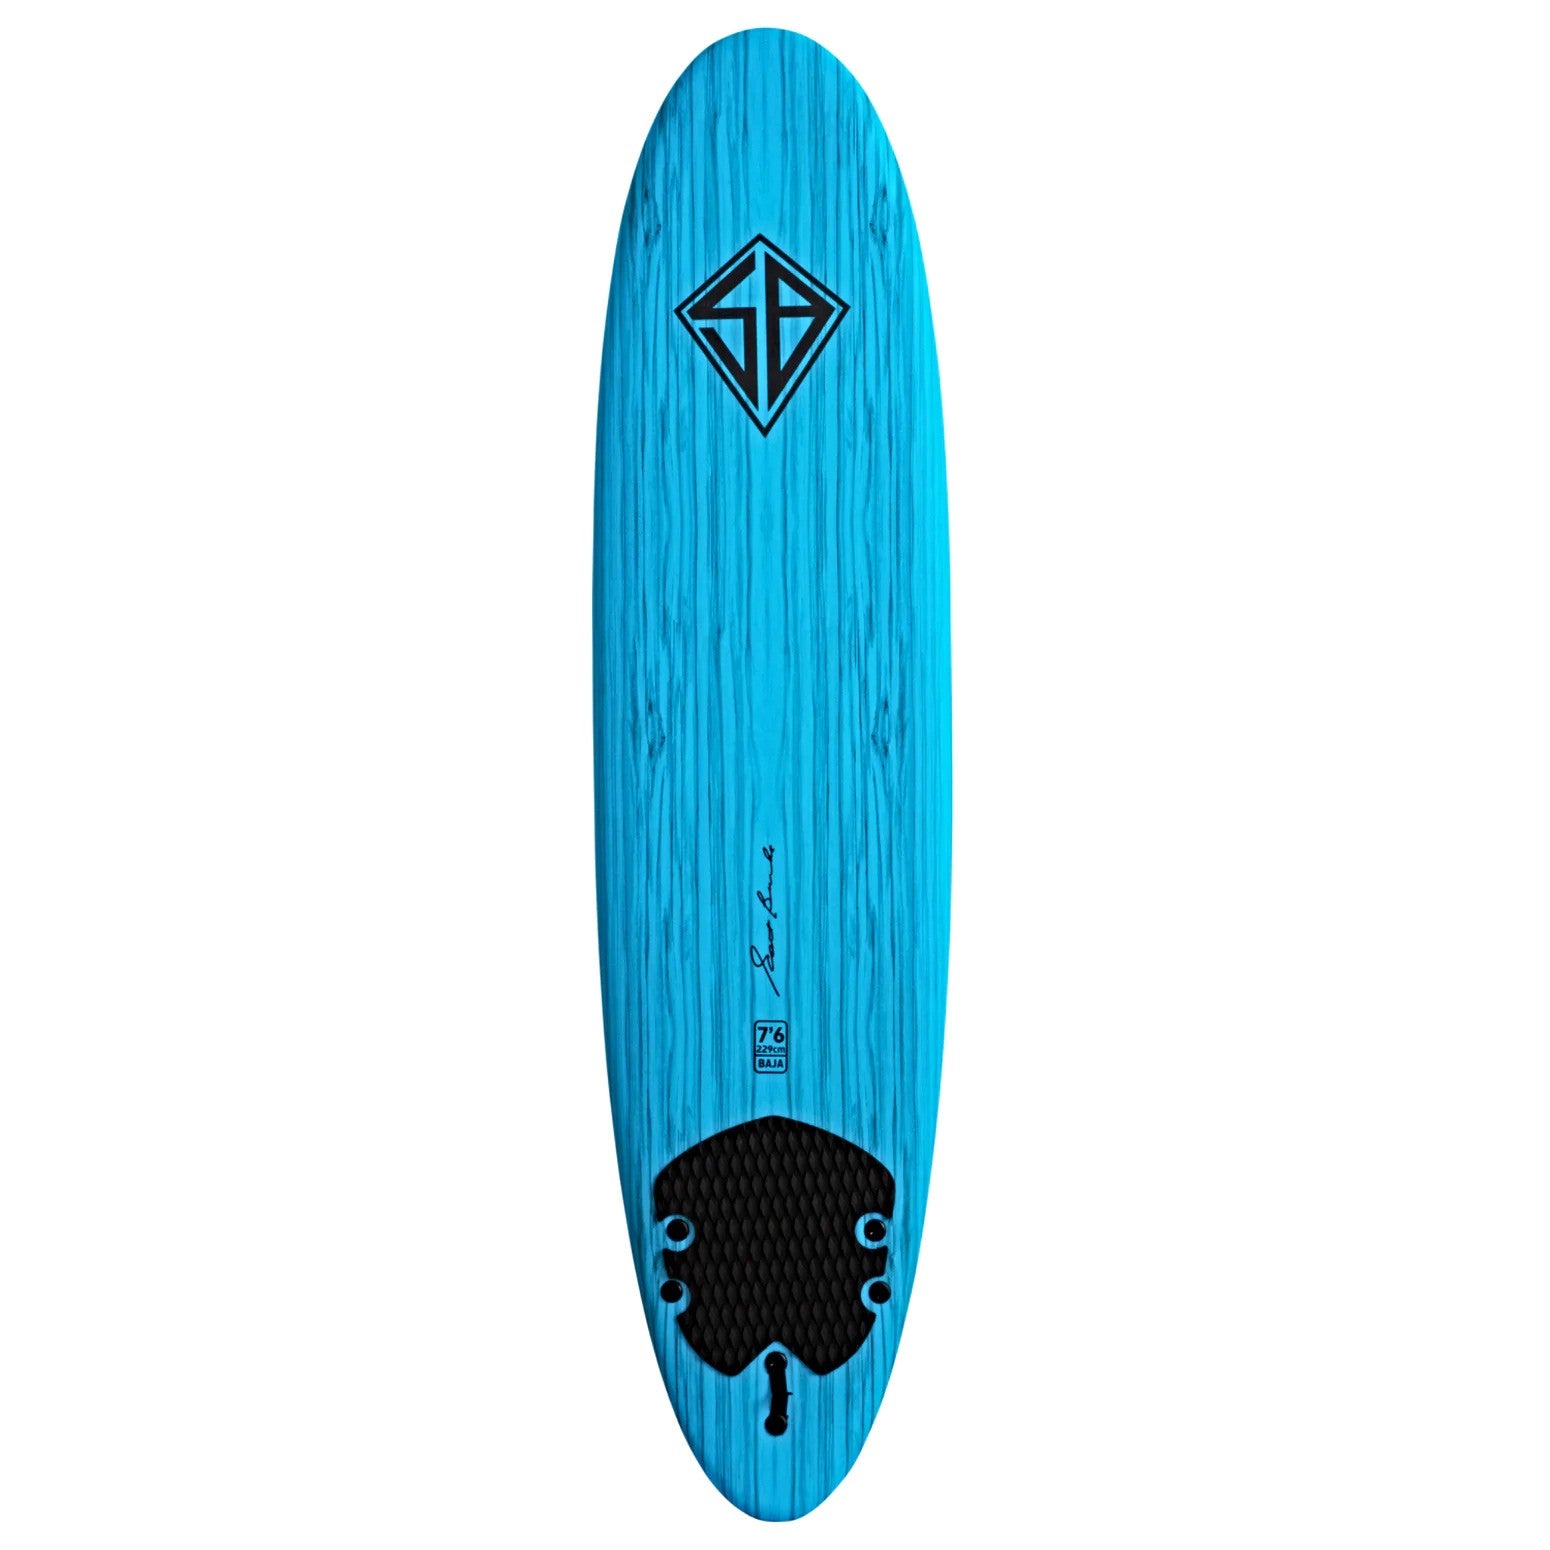 CBC - Tabla de surf de espuma - Softboard 7'6 Scott Burke - Azul claro